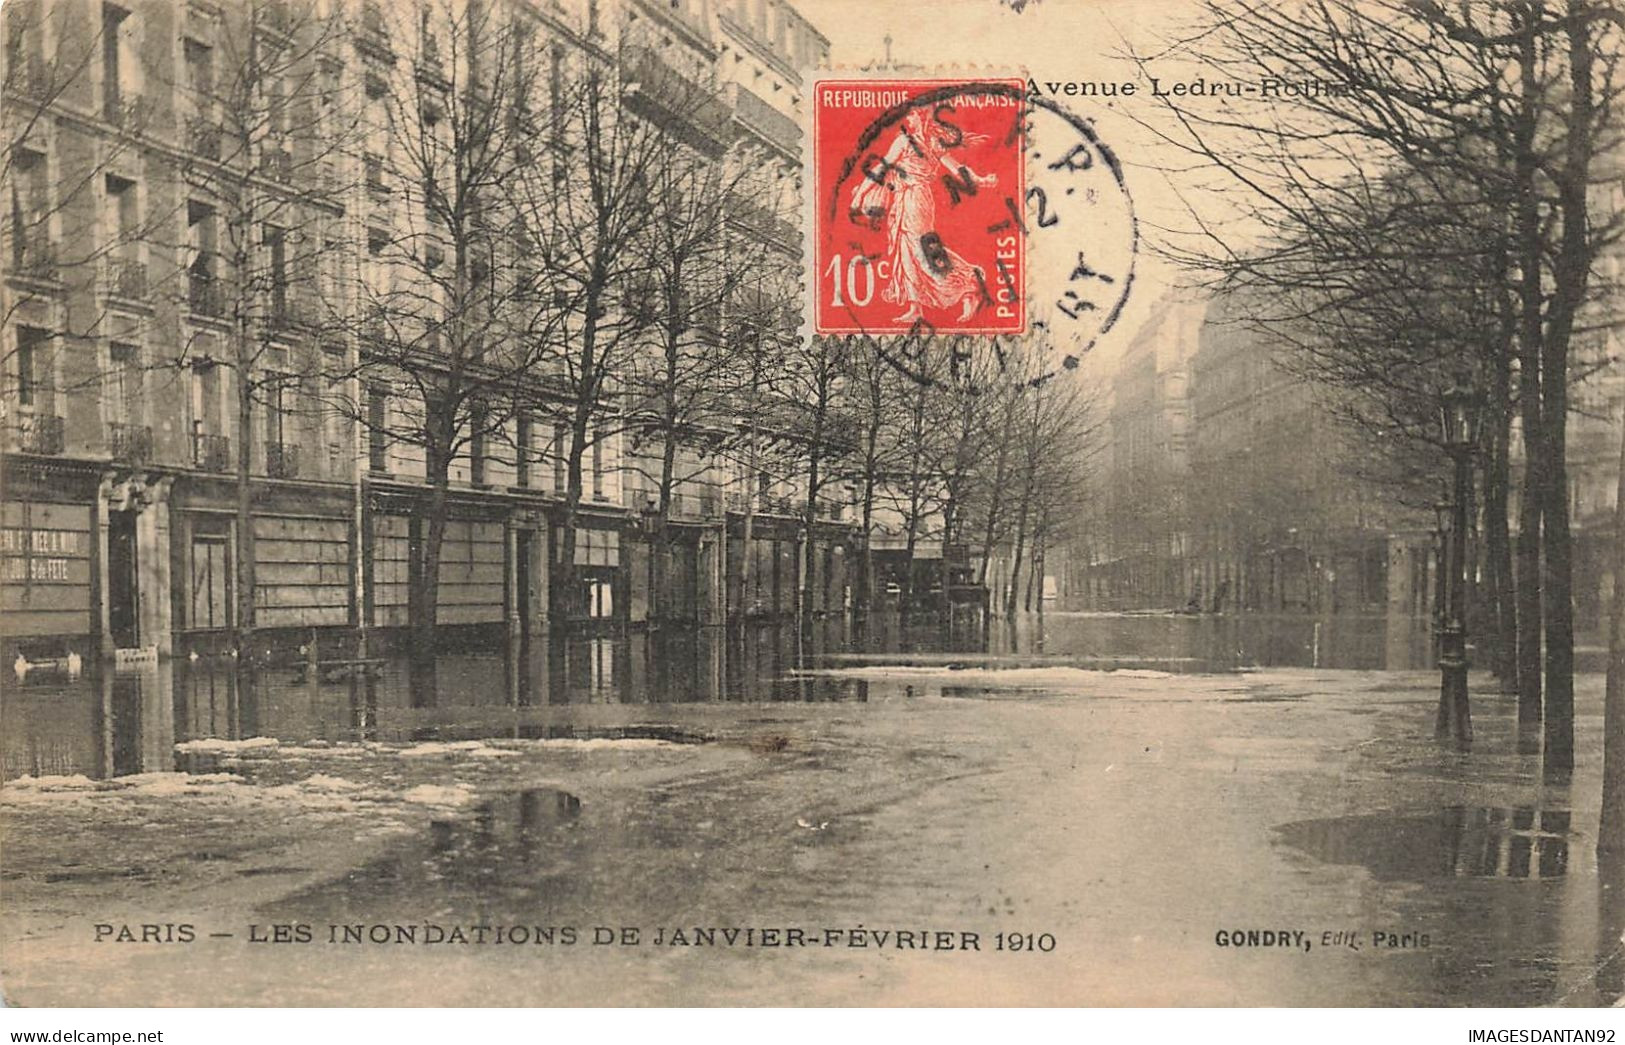 75 PARIS 12 #22563 AVENUE LEDRU ROLLIN INONDATIONS 1910 EDIT GONDRY - Paris (12)